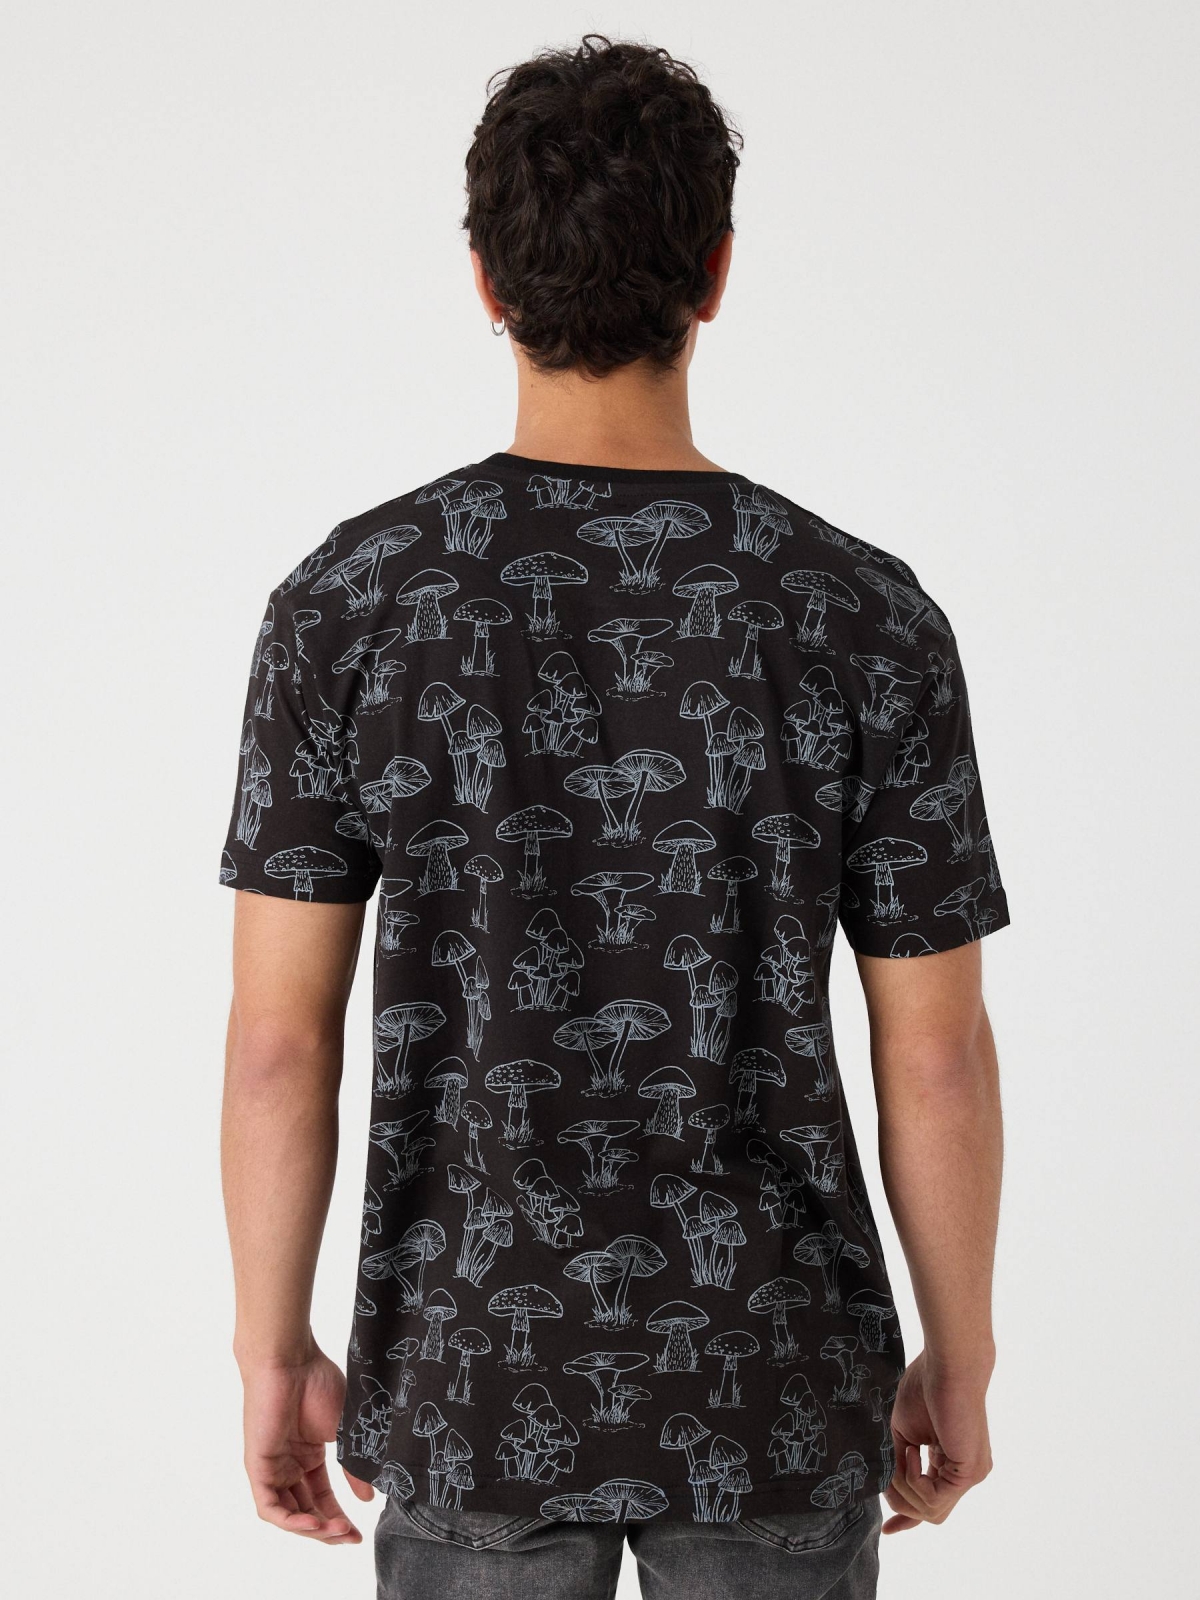 Camiseta estampado mushrooms negro vista media trasera